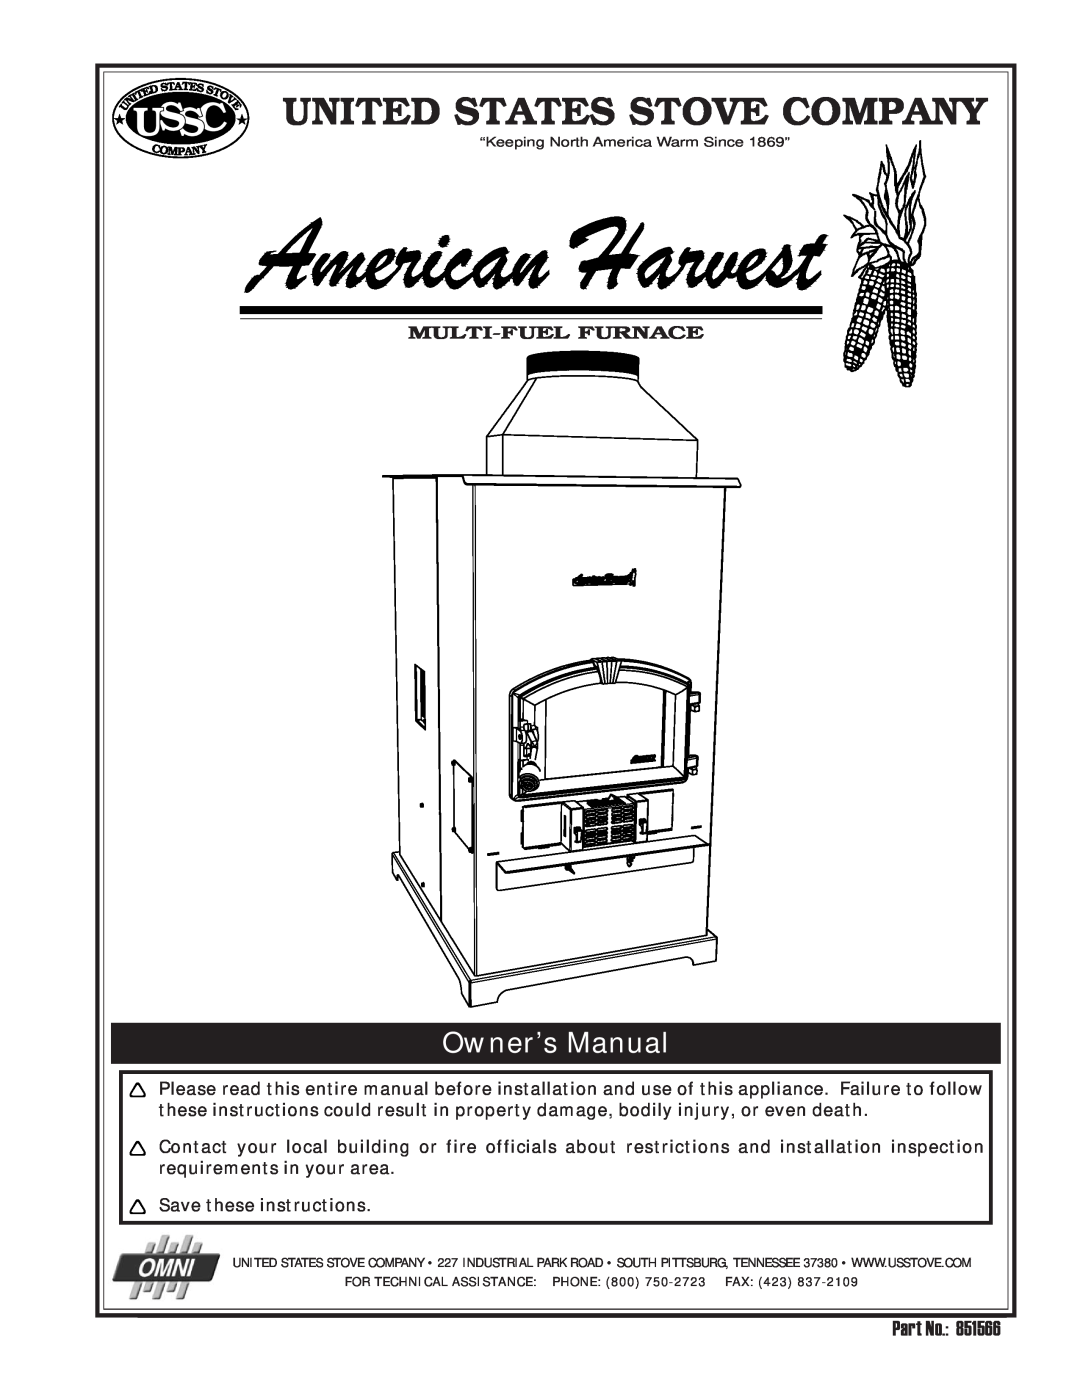 United States Stove 6100 owner manual United States Stove Company, Ussc, Multi-Fuelfurnace 